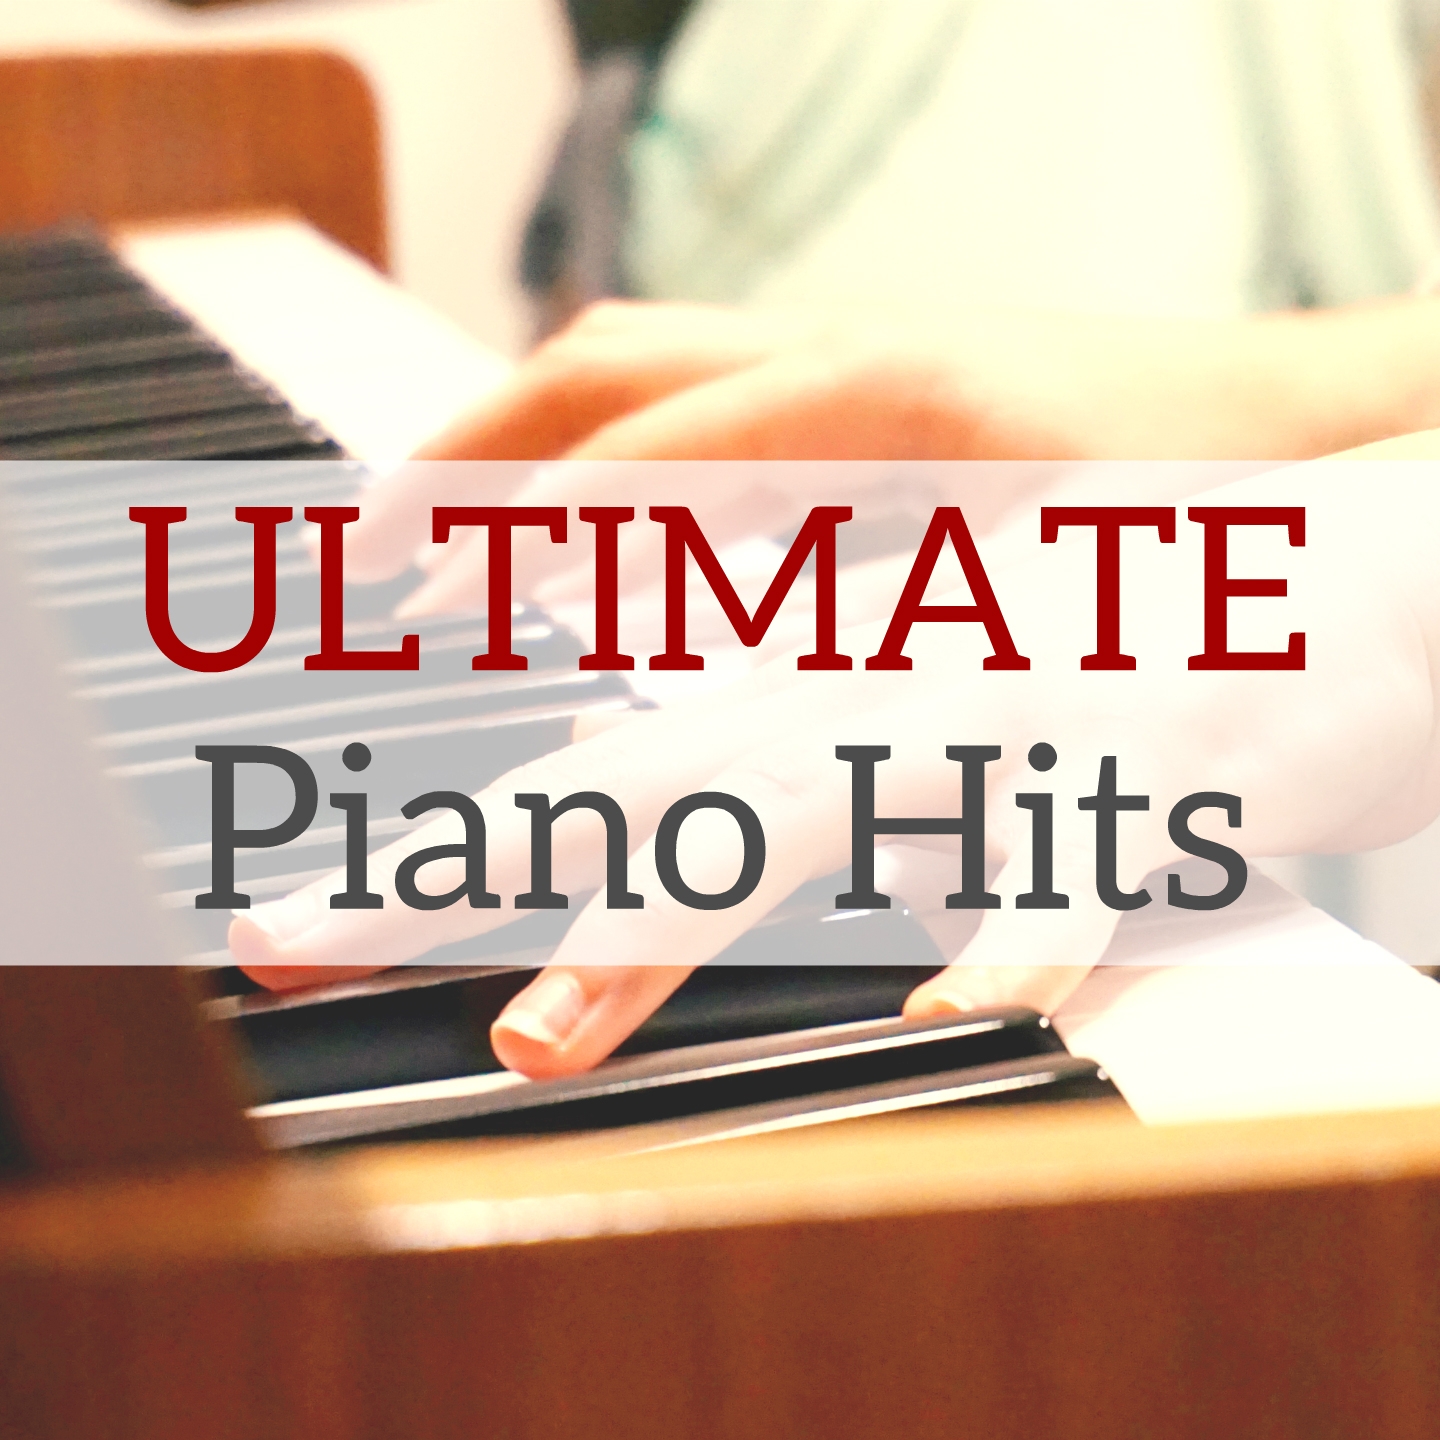 Ultimate Piano Hits